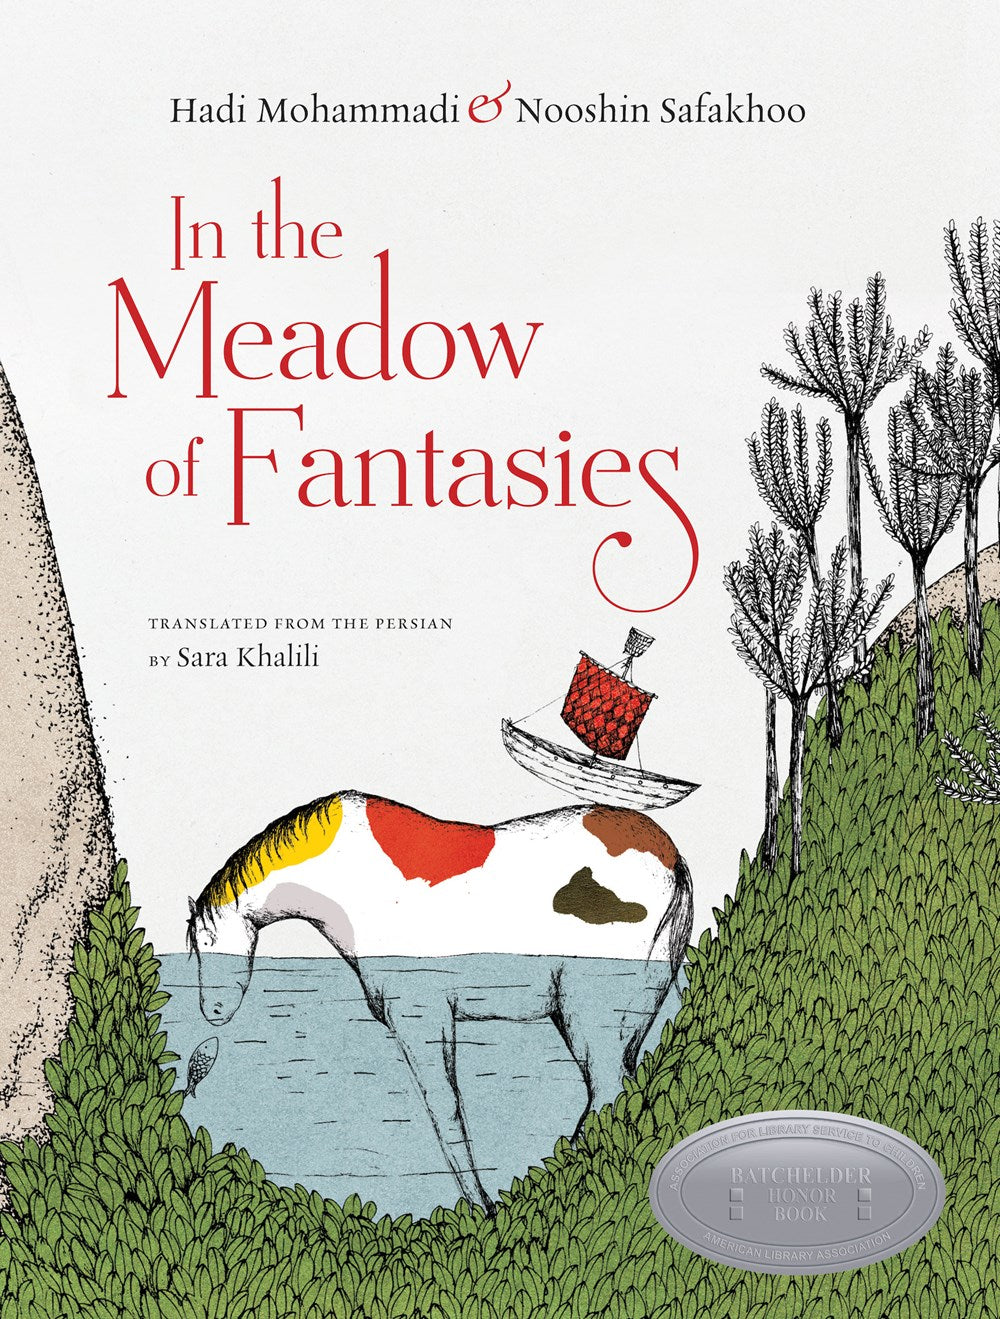 In the Meadow of Fantasies by Hadi Mohammadi & Nooshin Safakhoo (Translated from the Persian by Sara Khalili)